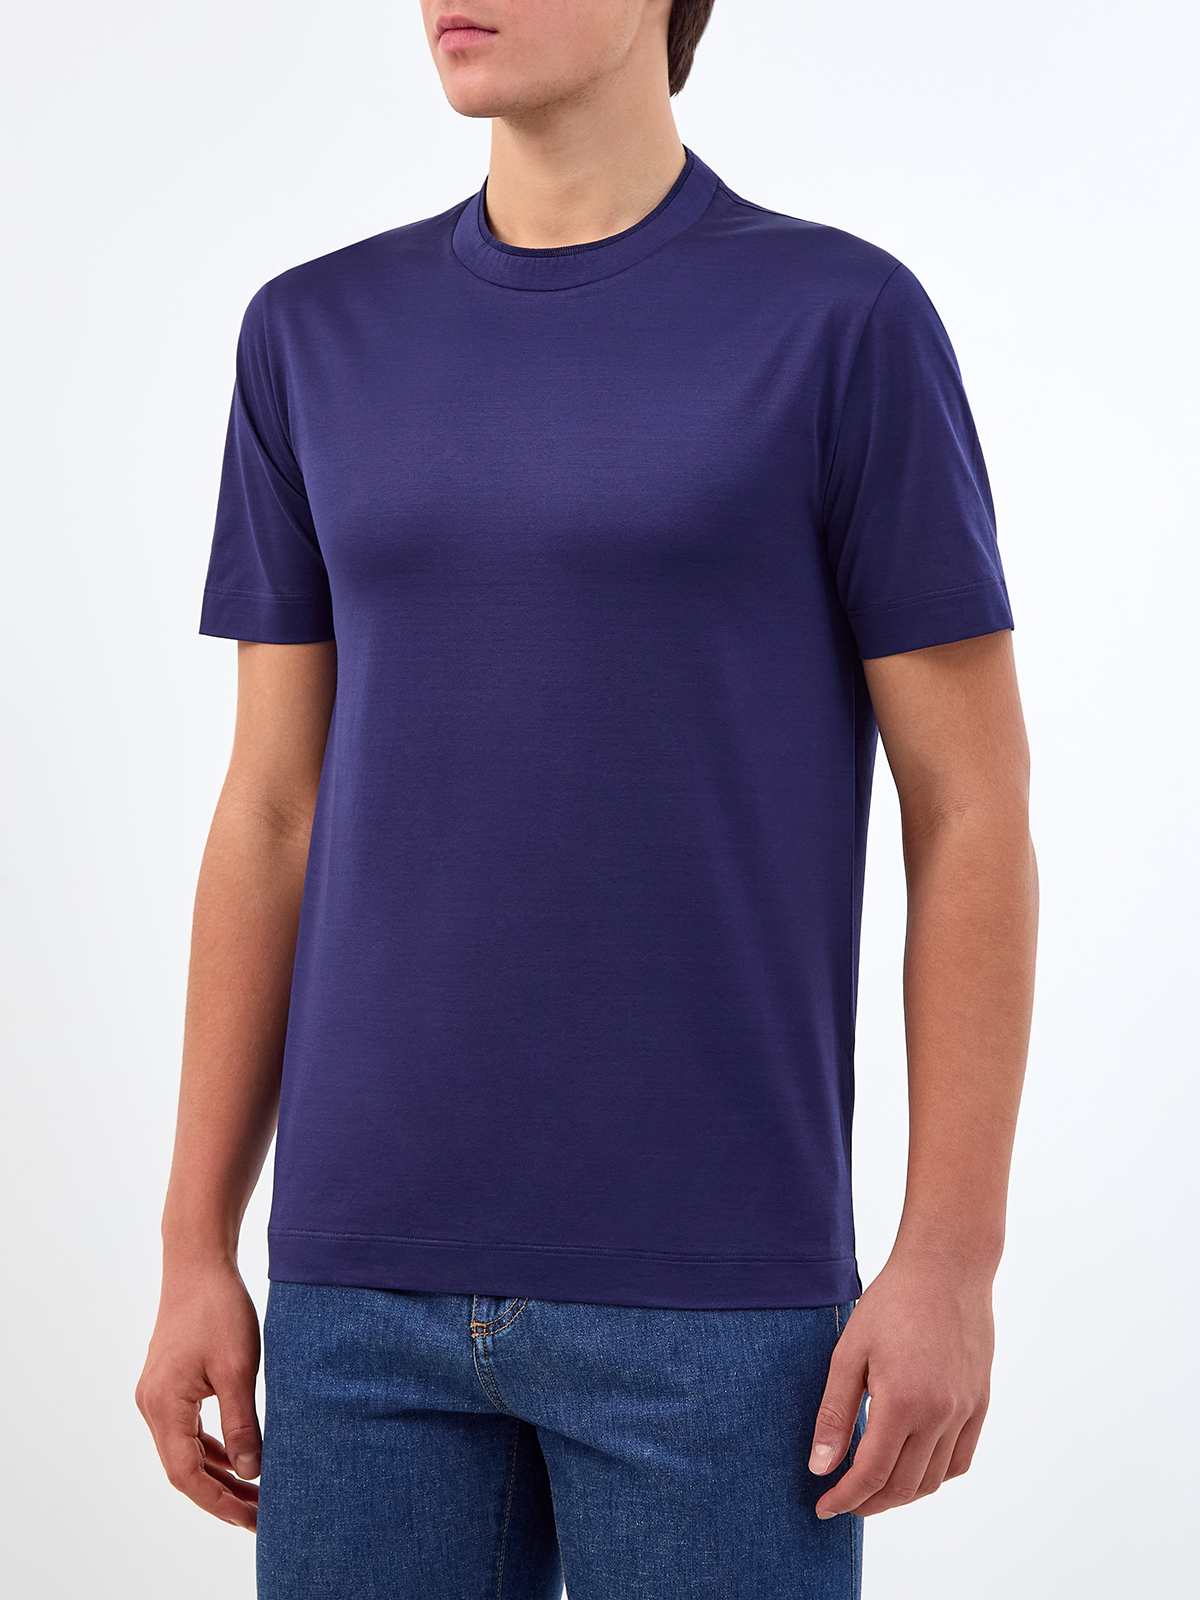 Однотонная футболка из гладкого хлопкового джерси CANALI, цвет синий, размер 50;52;54;56;58;60;62;48 - фото 3